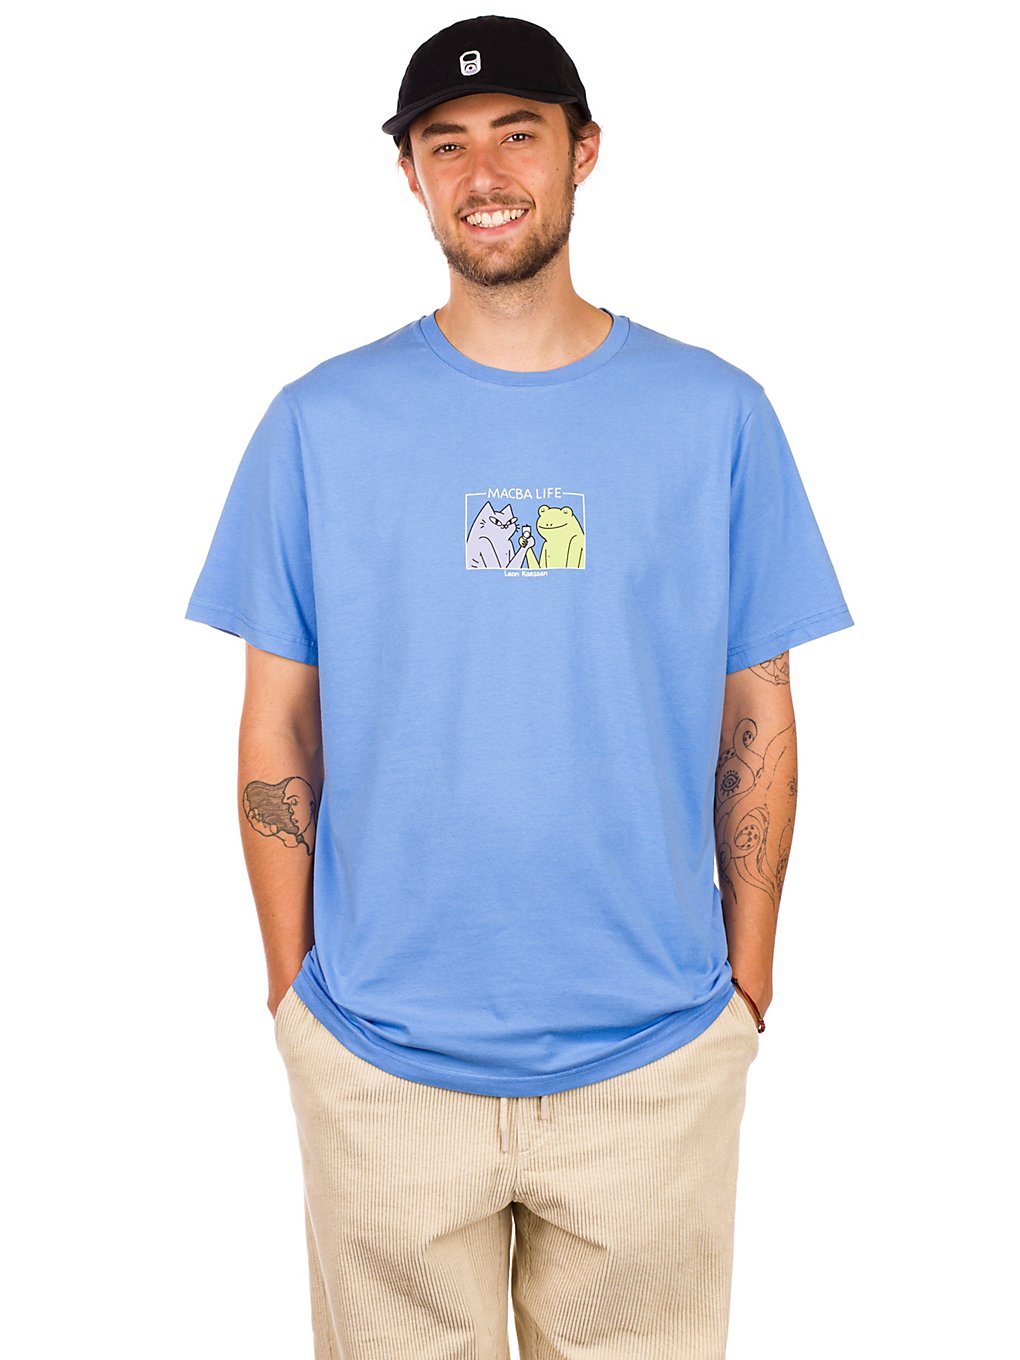 Macba Life Homies T-Shirt blue